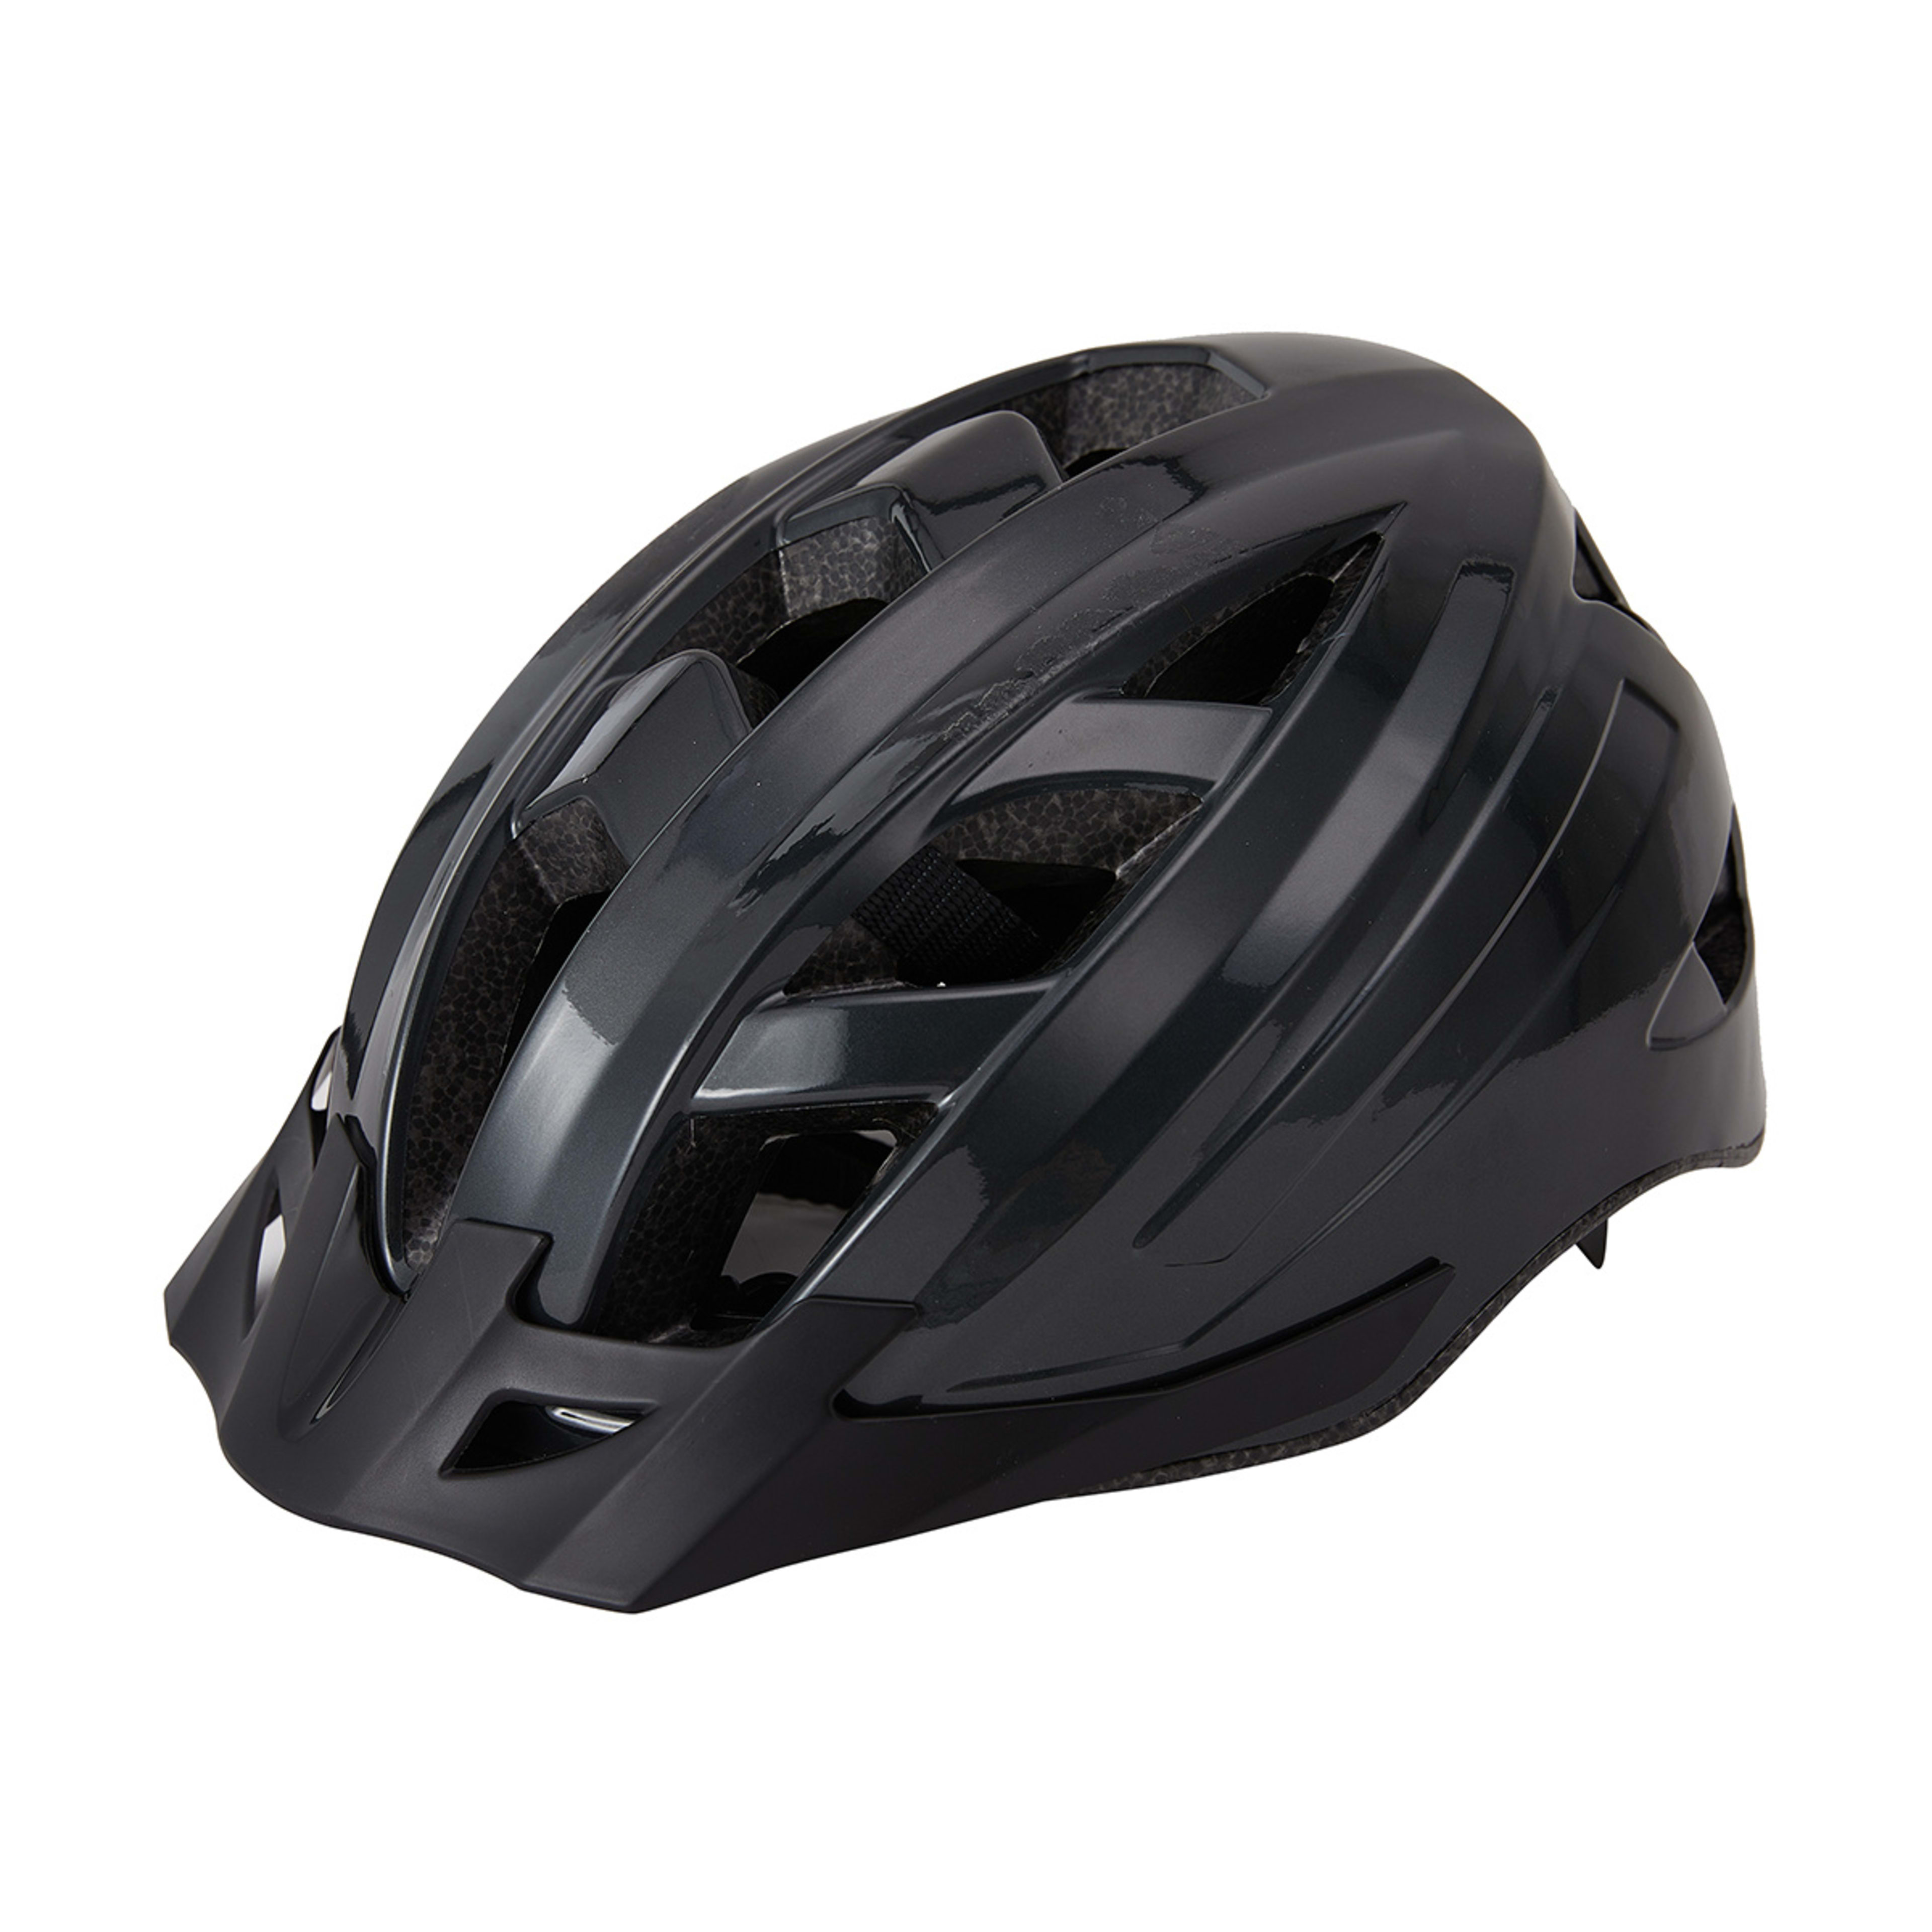 Urban Helmet with Light - Large - Kmart